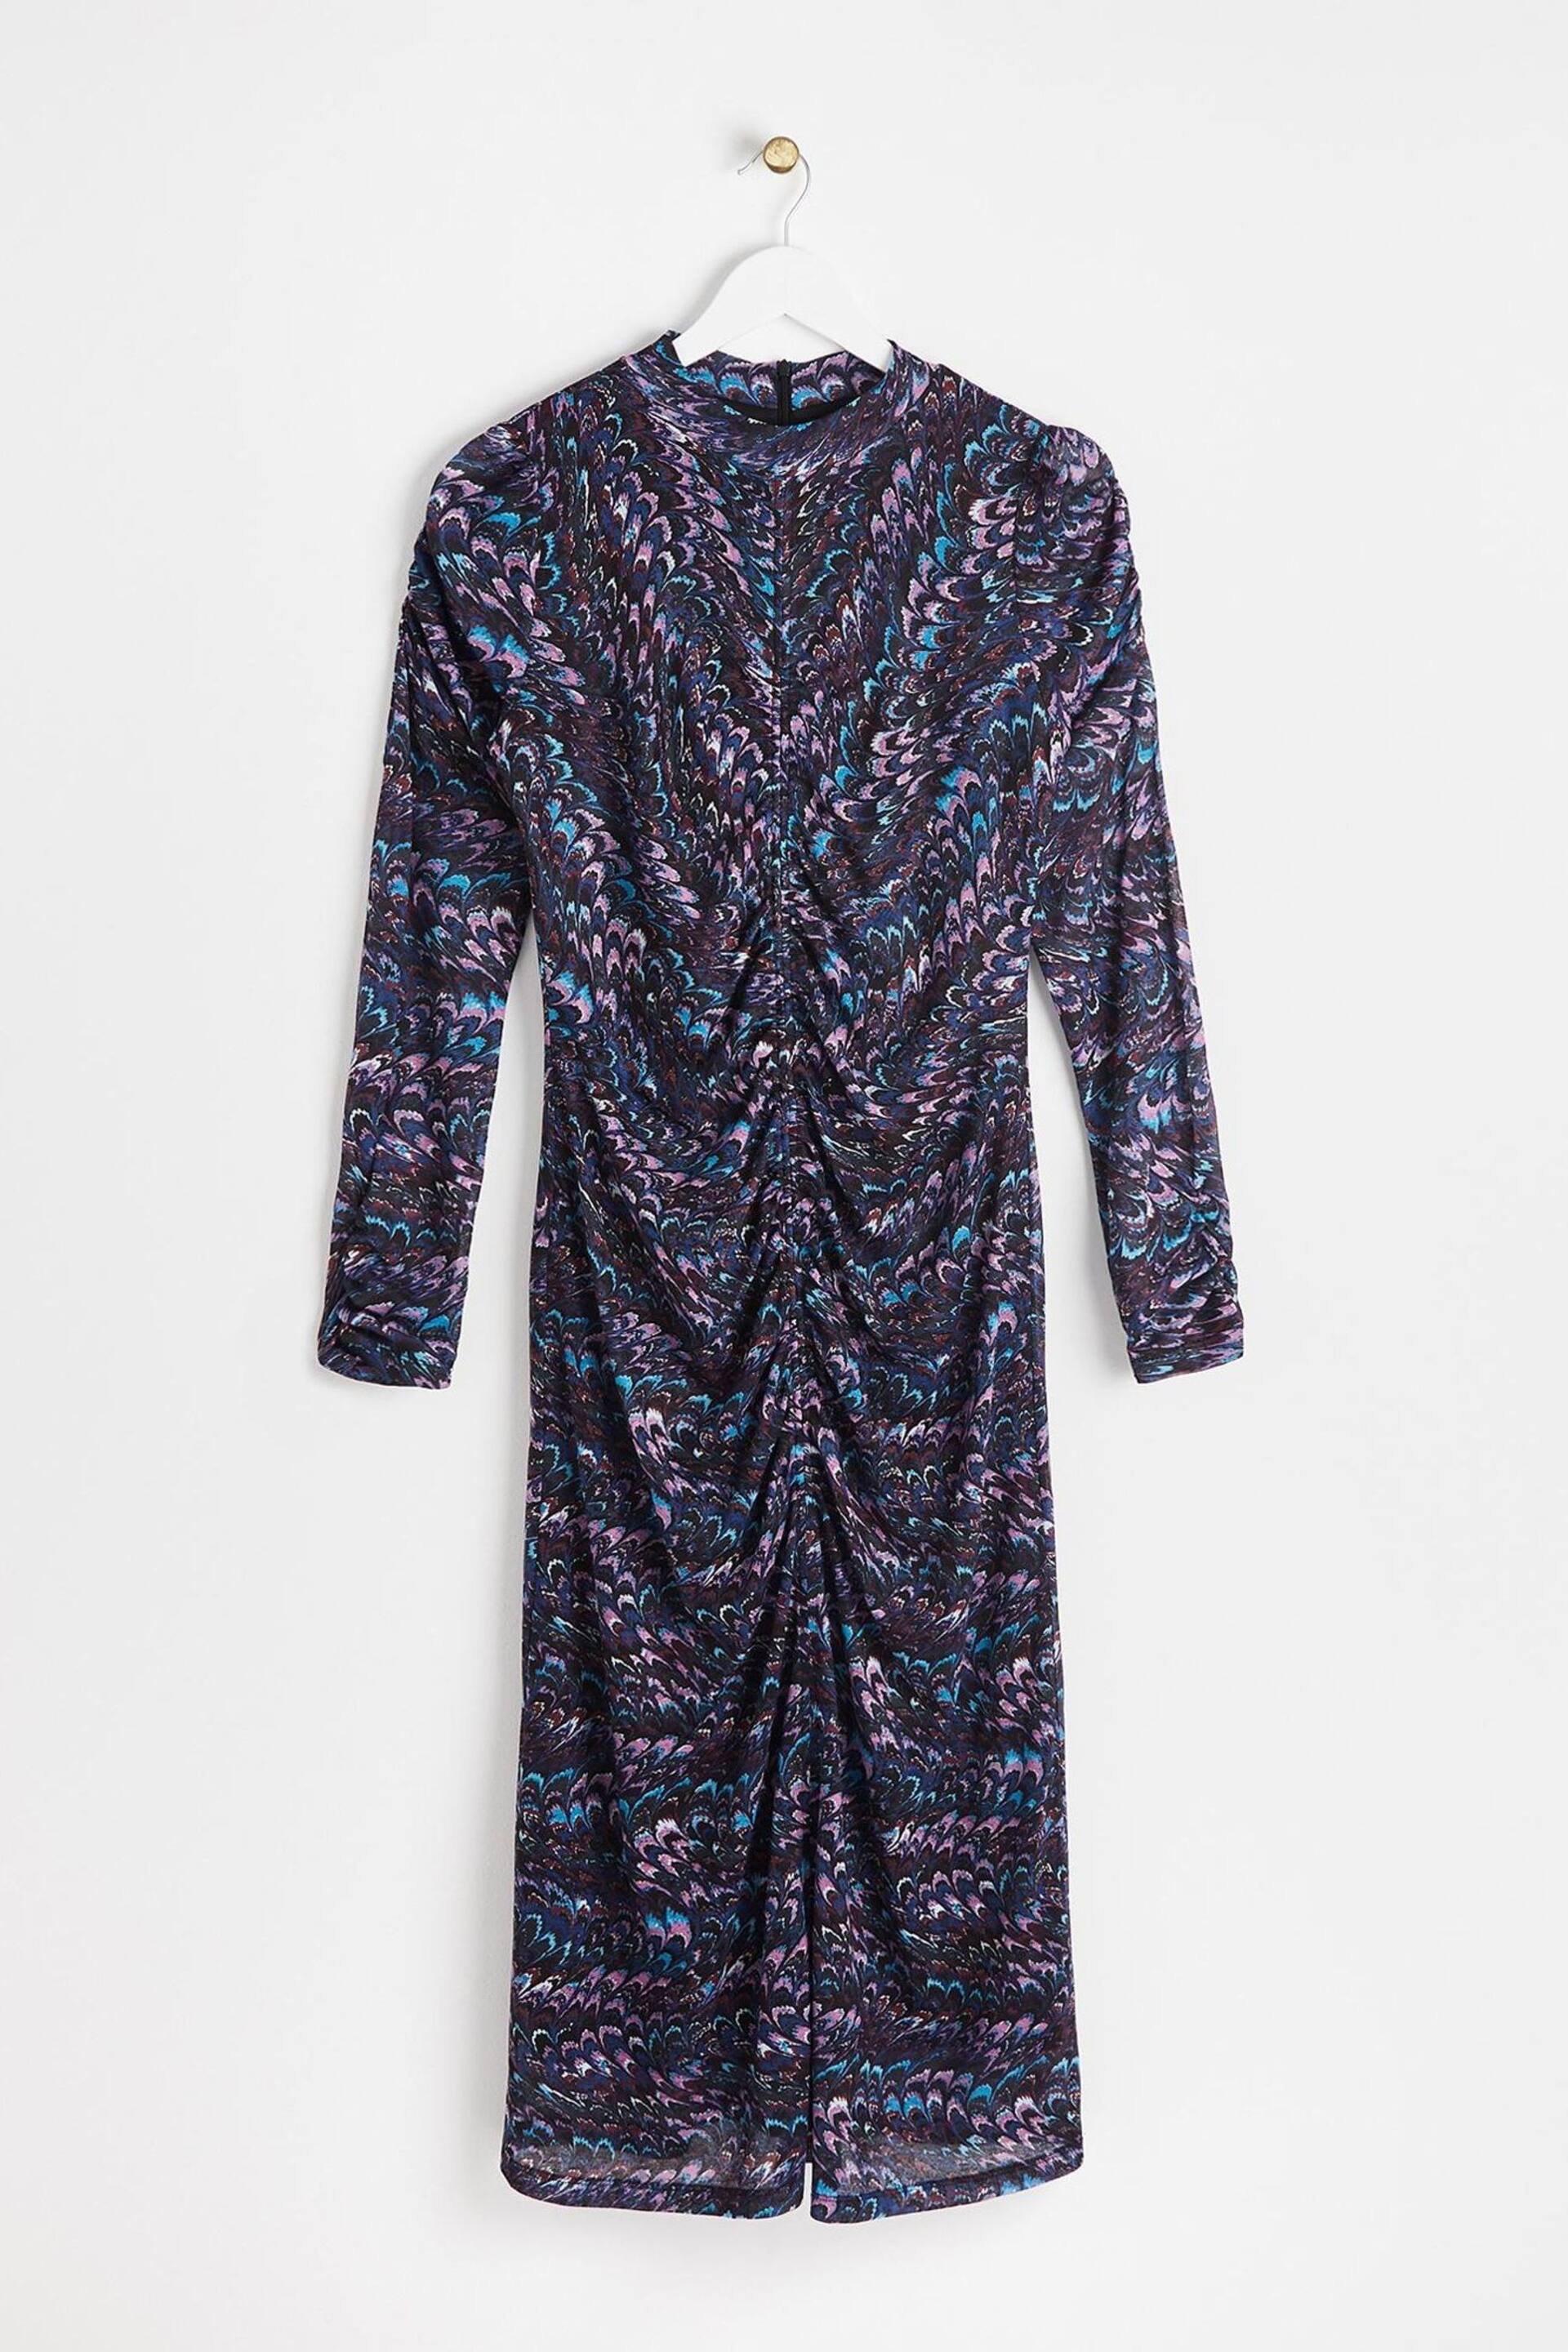 Oliver Bonas Blue Feather Print Mesh Midi Dress - Image 4 of 8